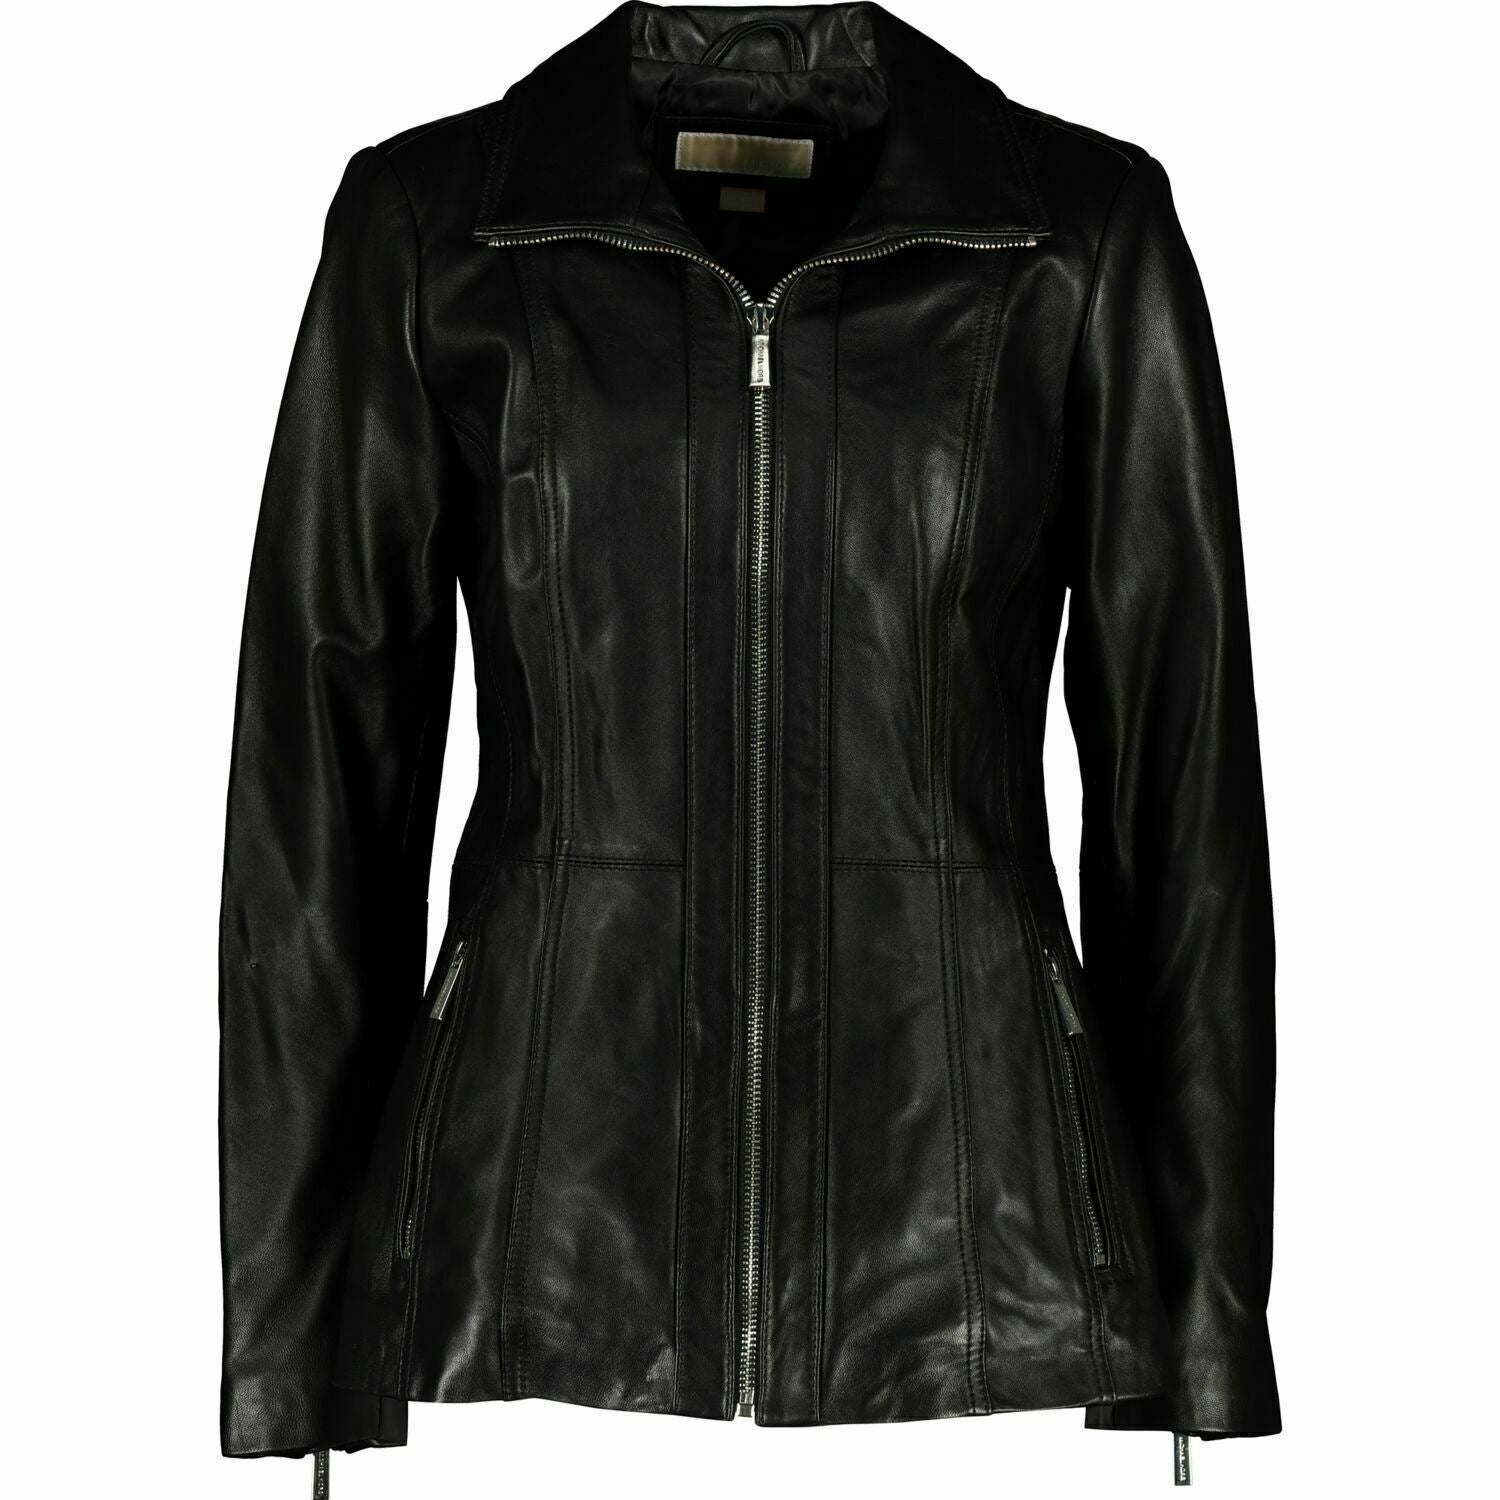 MICHAEL KORS Women's Black Leather Zip Jacket, size SMALL